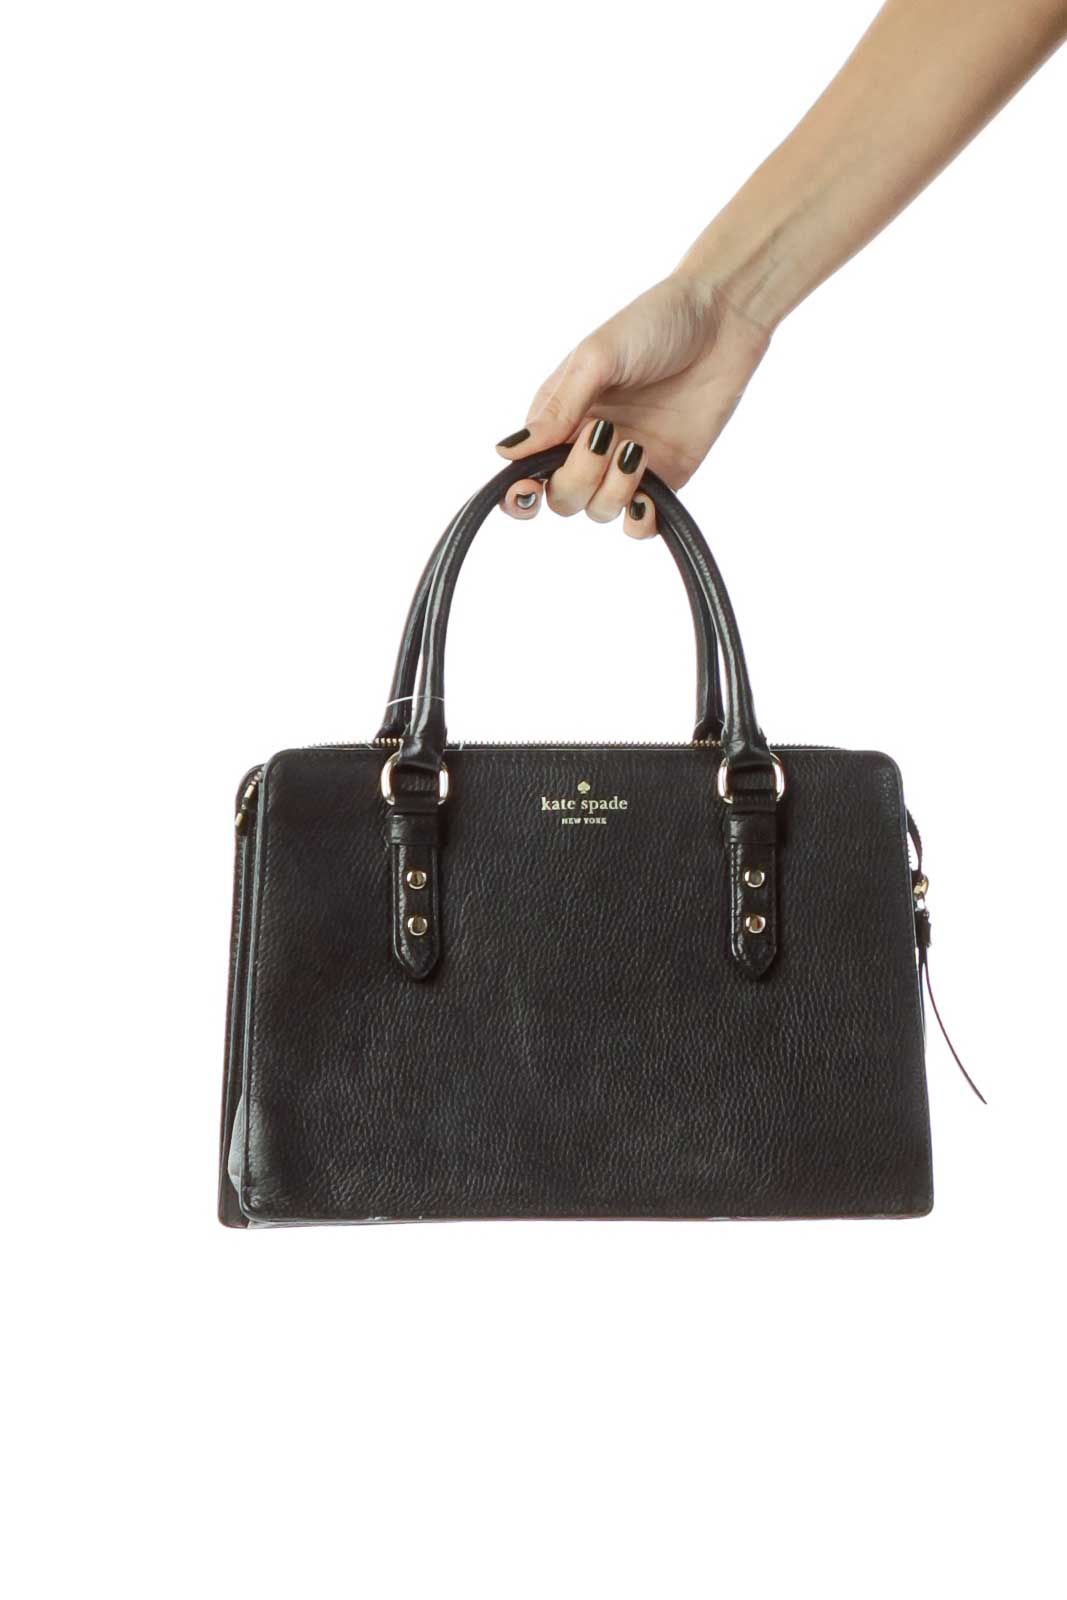 Dereon Purse  Kate spade handbags, Leather satchel bag, Purses